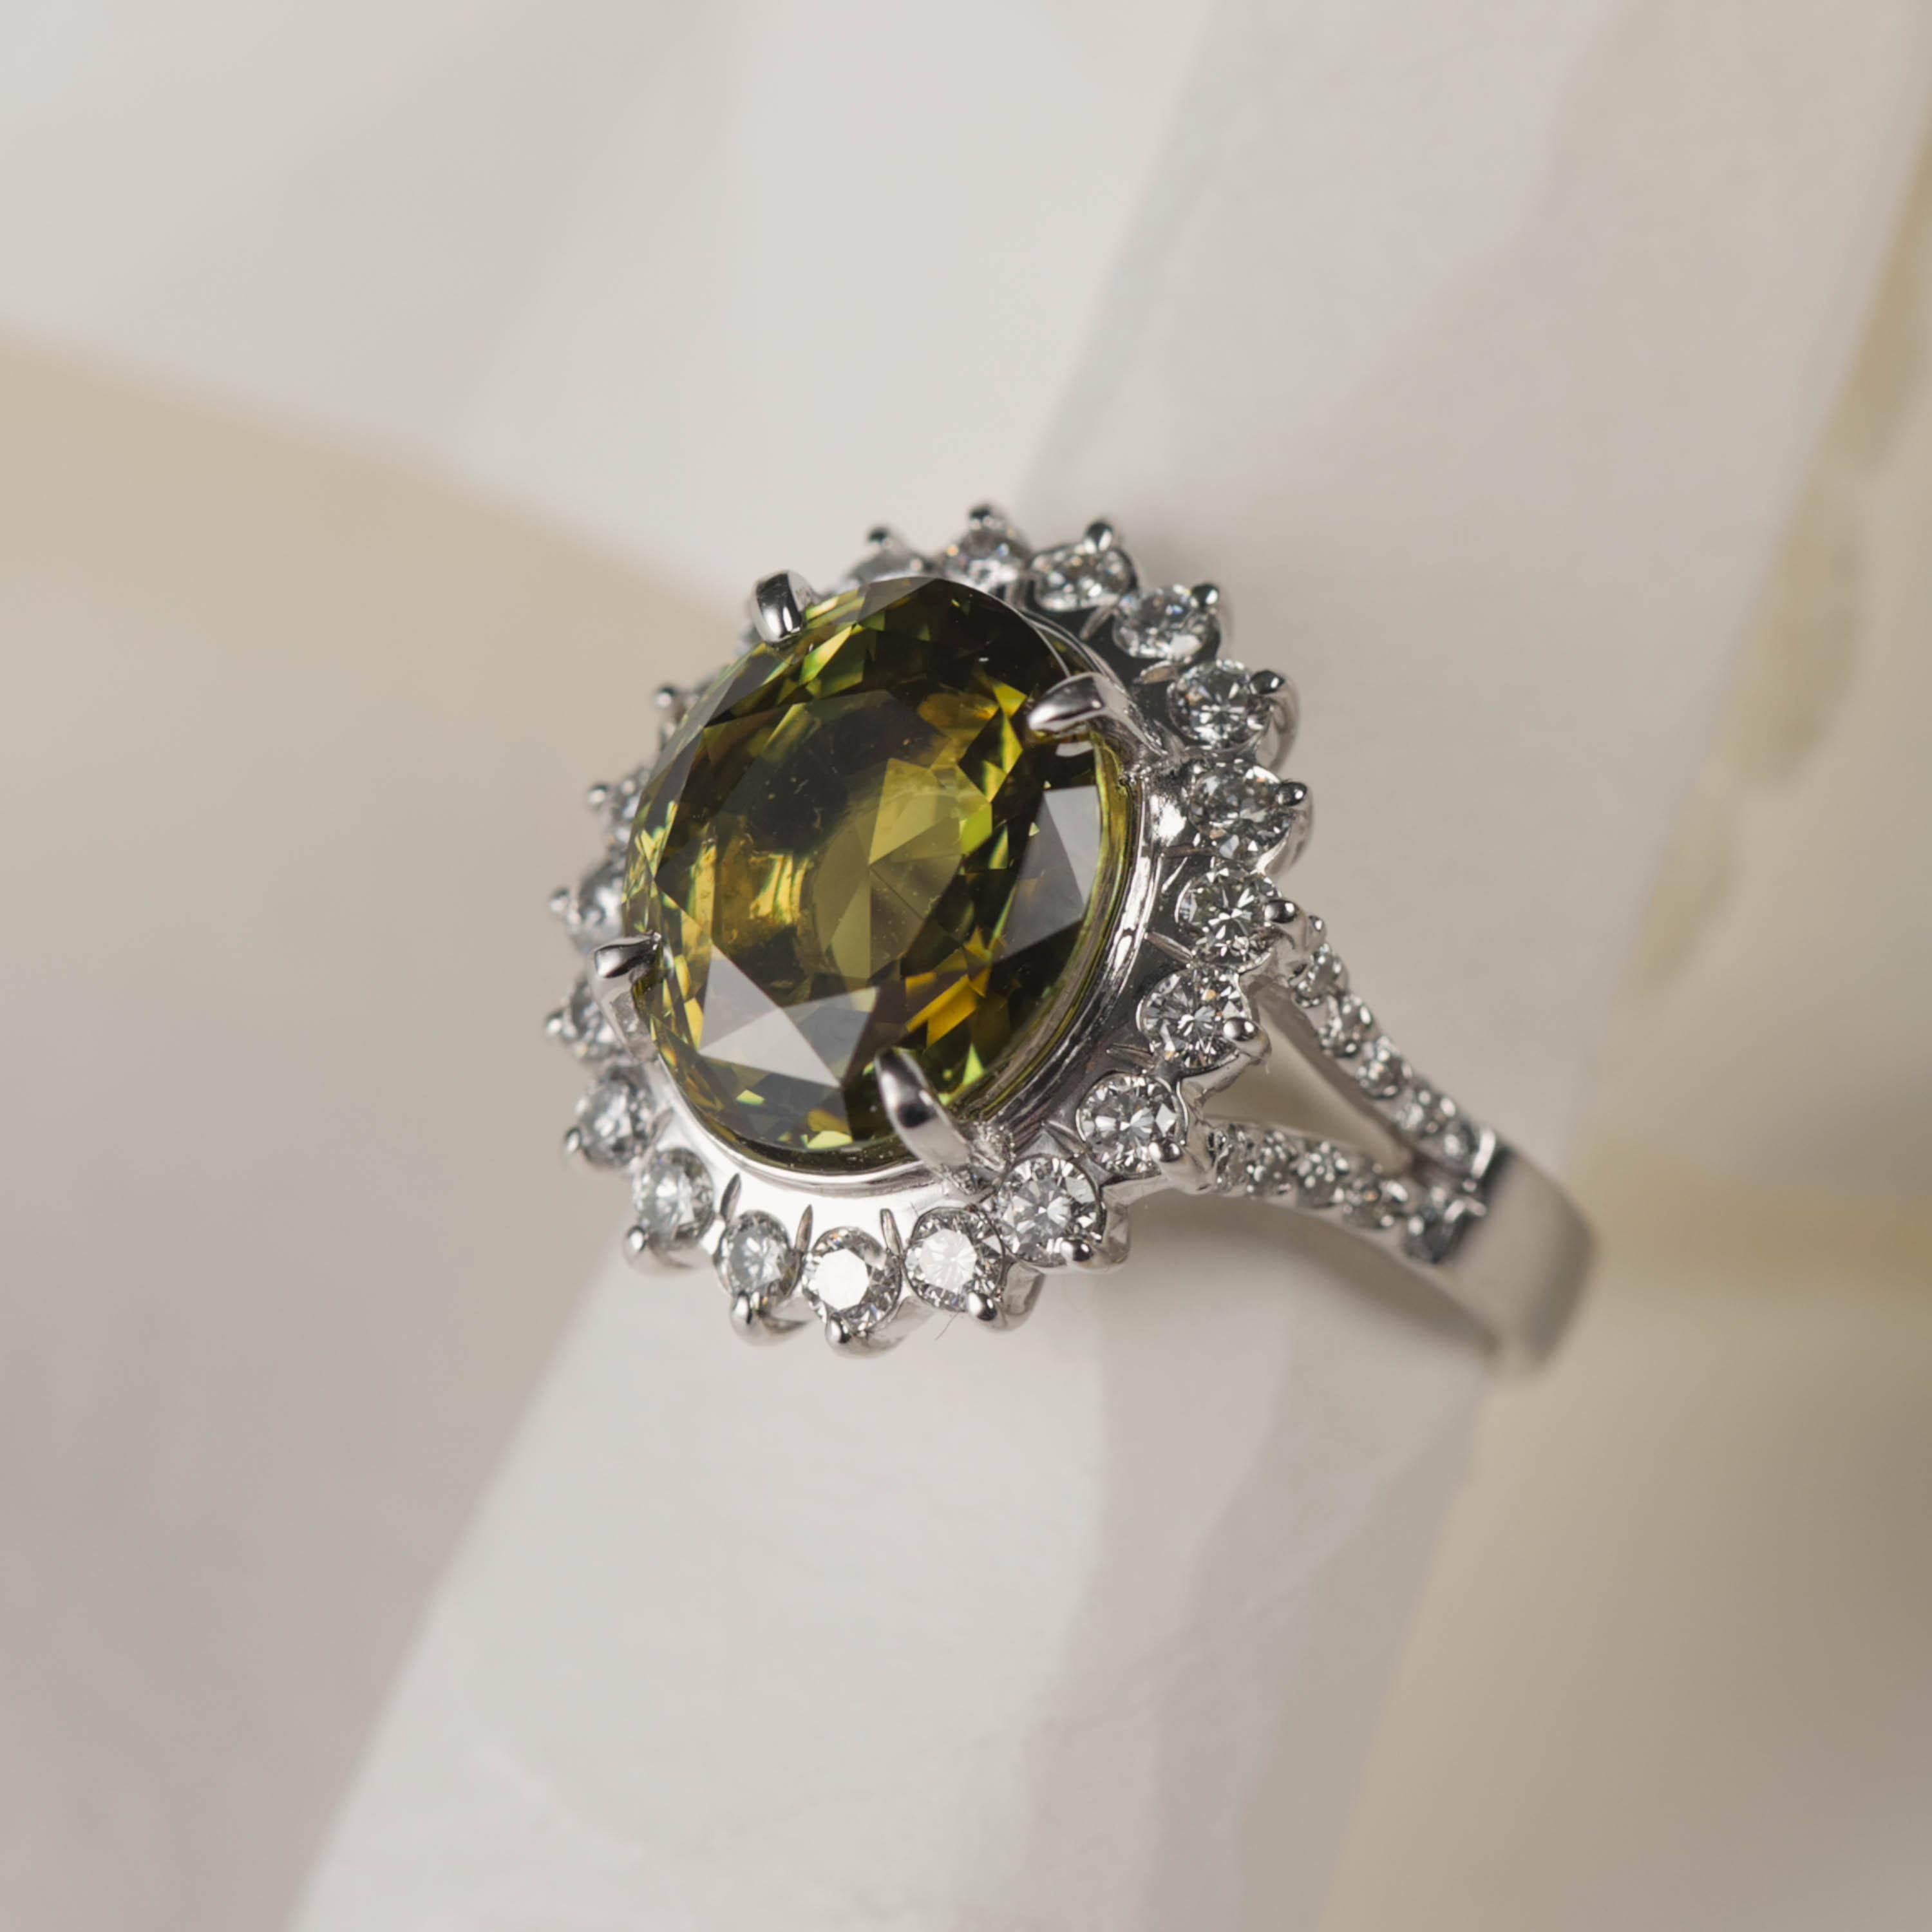 Alexandrite & Diamond Ring 7.35 Carats, Rare Color Change Gem Certified 4